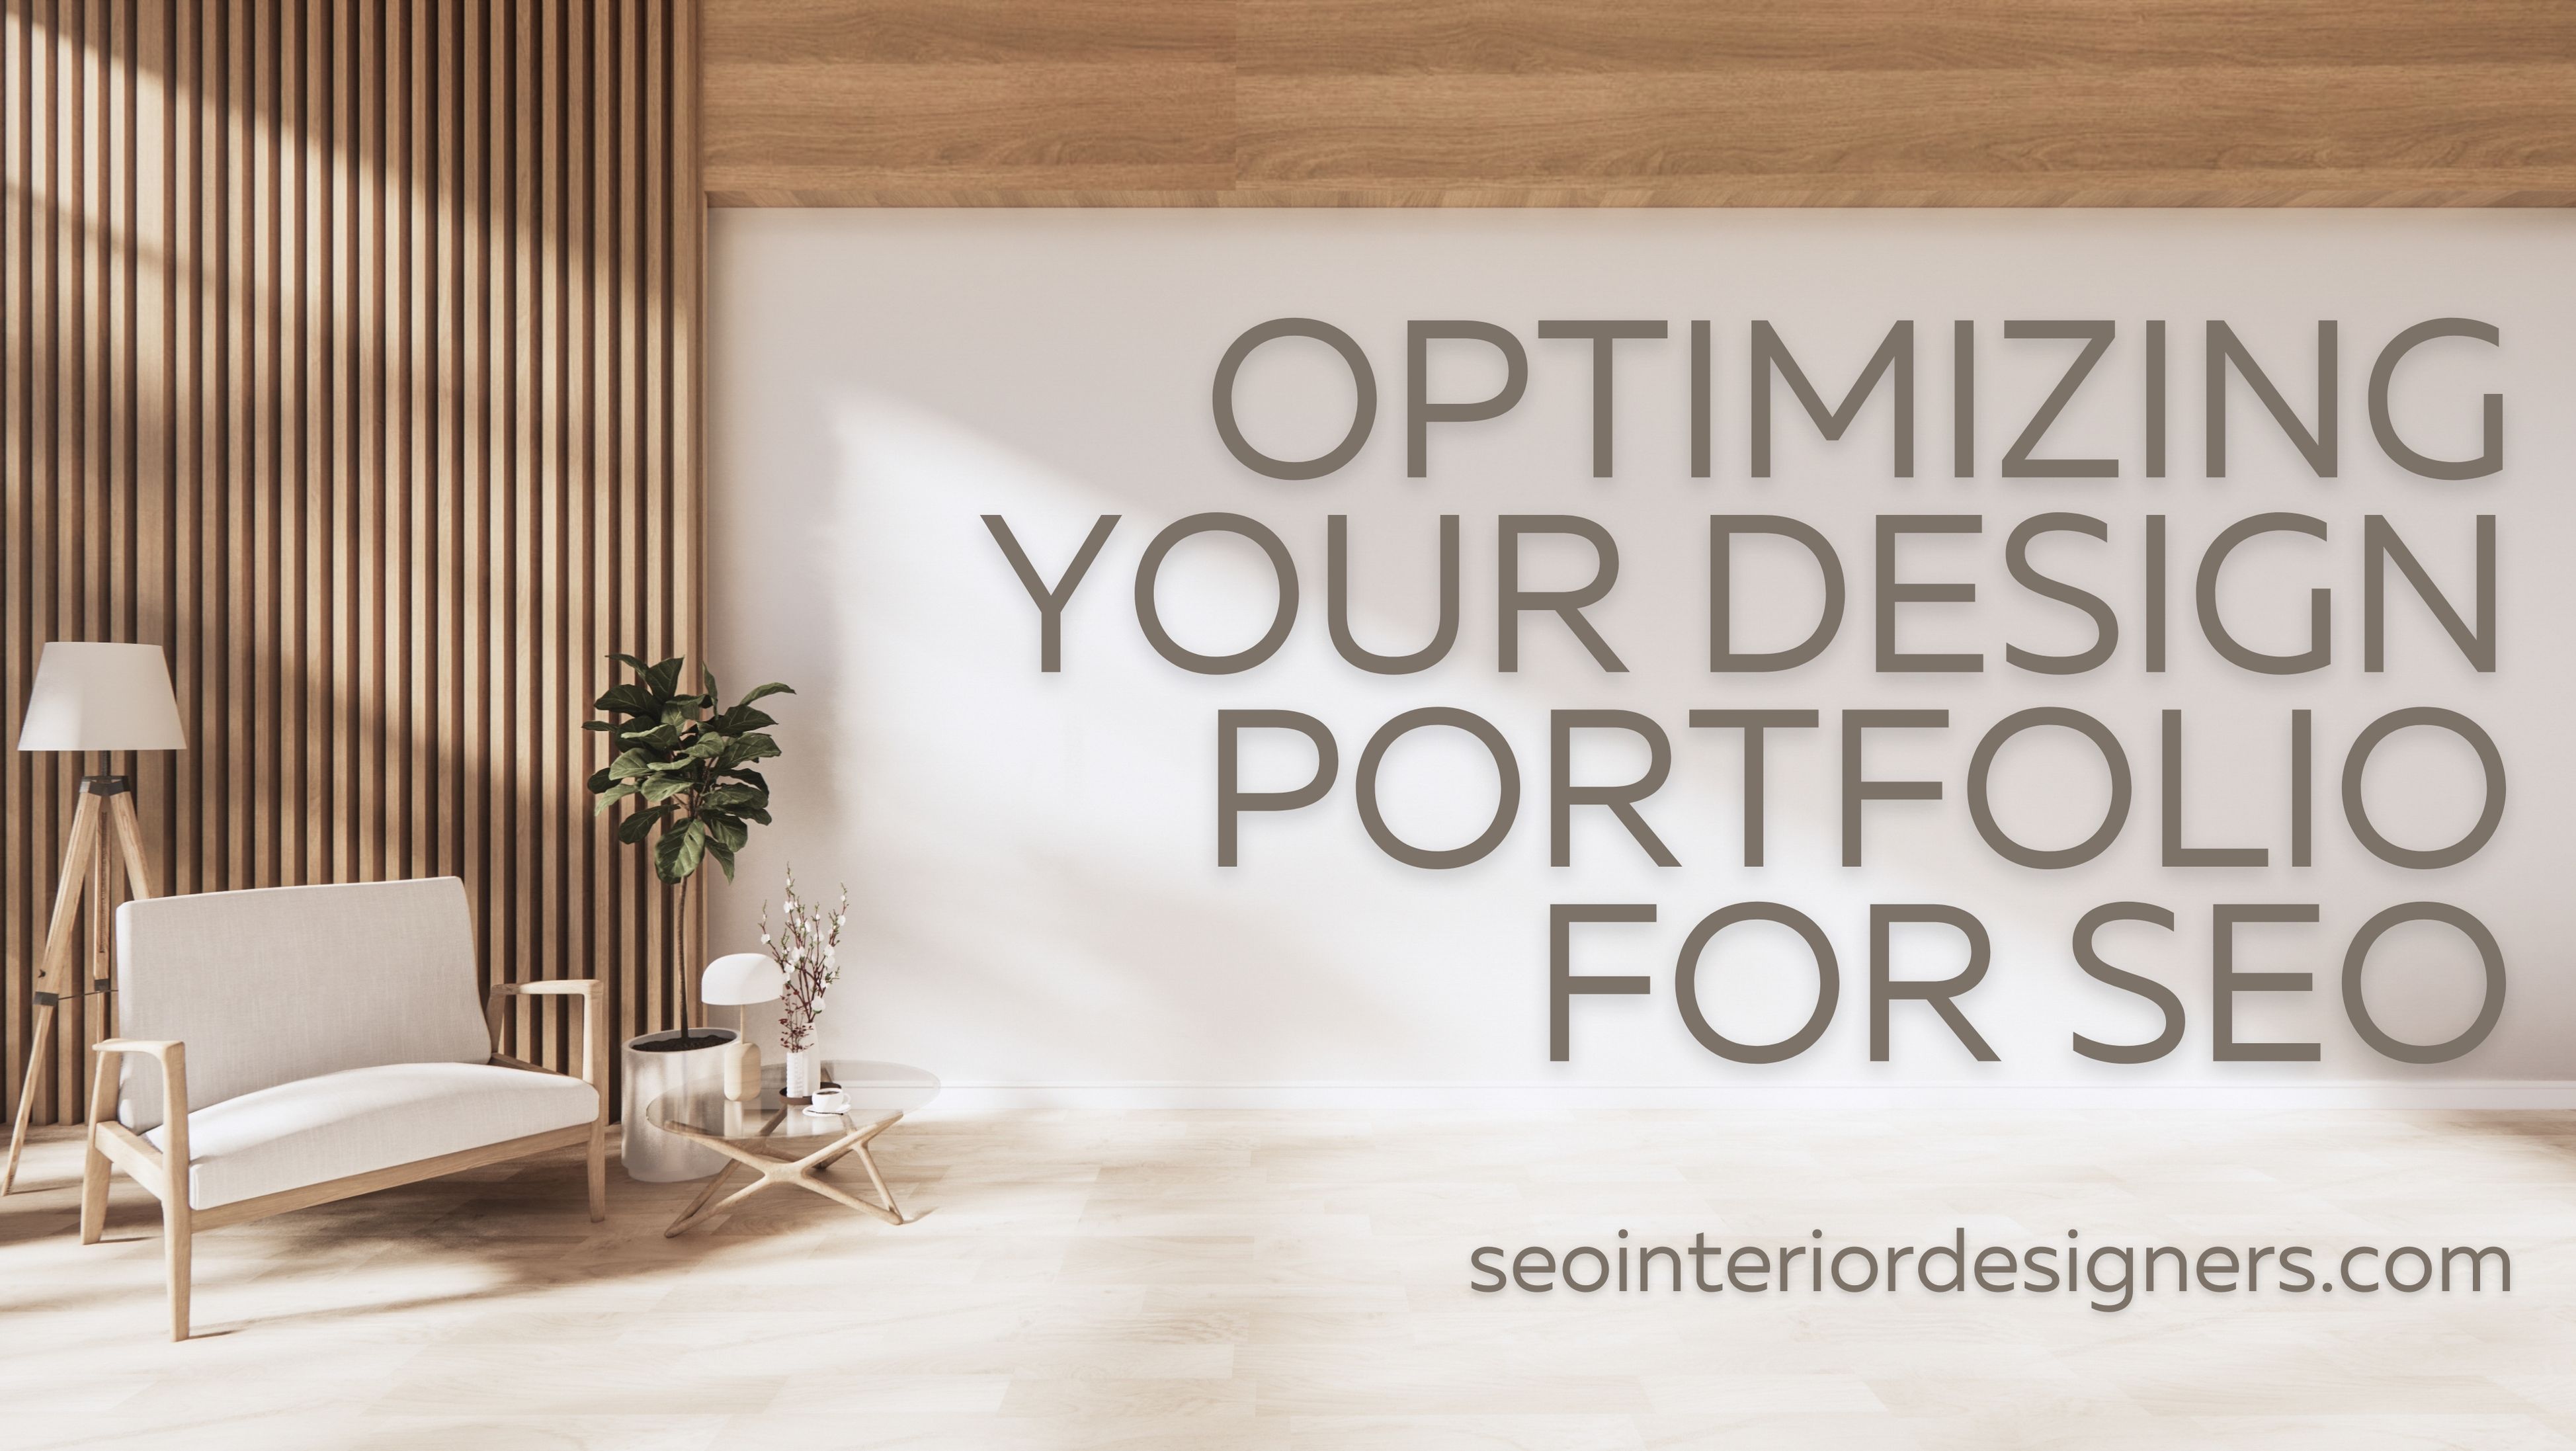 Optimizing Your Design Portfolio for SEO